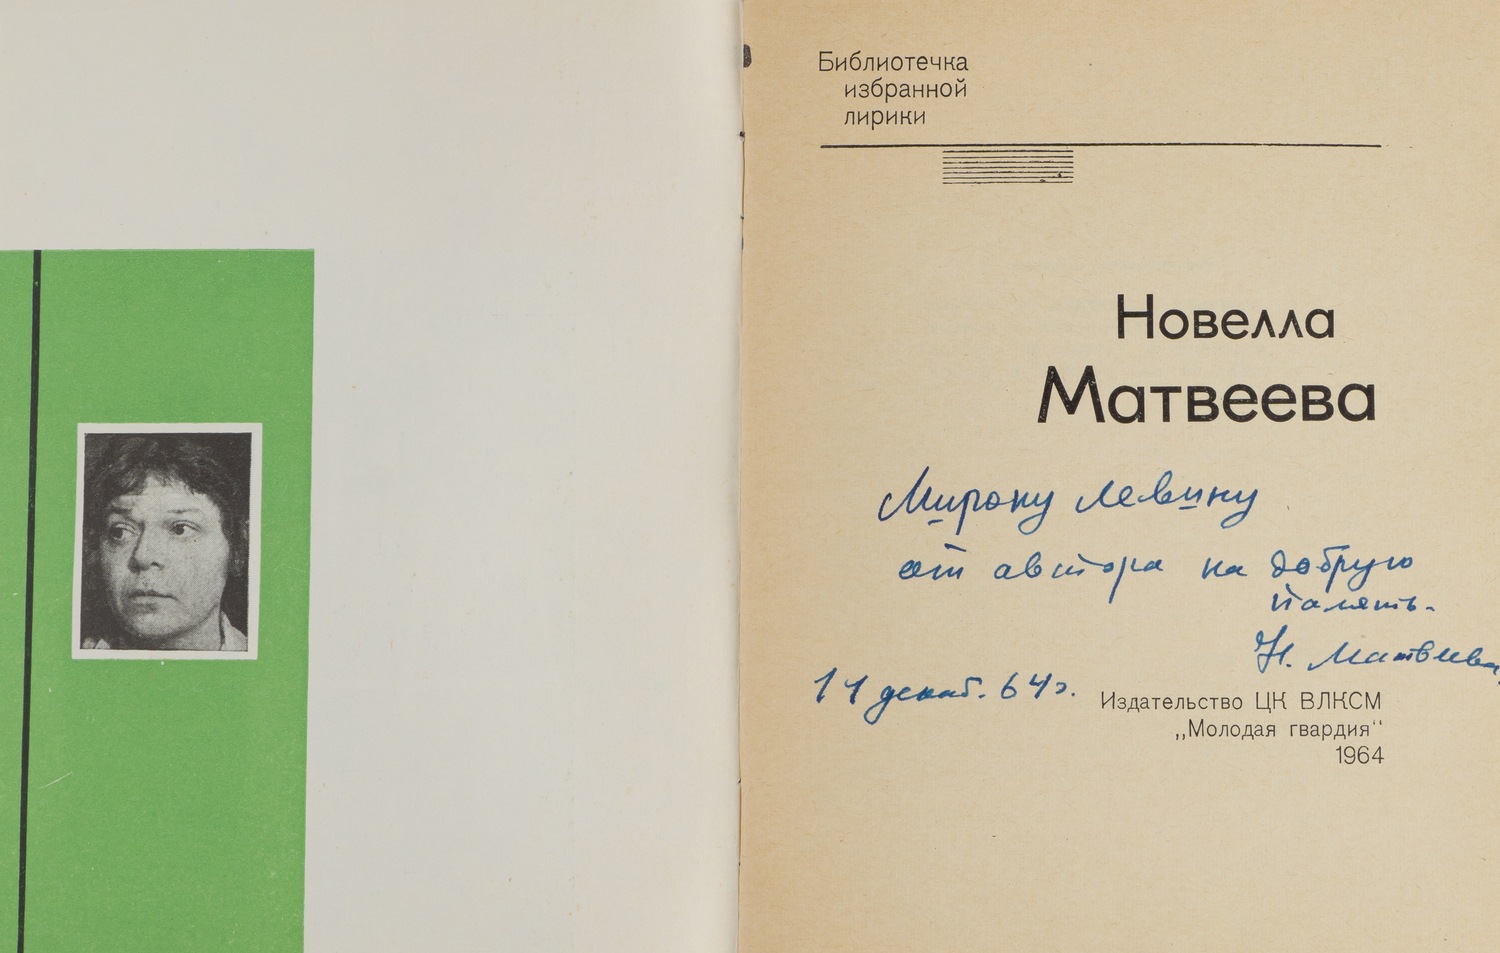 Матвеева Н. Избранная лирика (М., 1964). Дарственная надпись атвора.